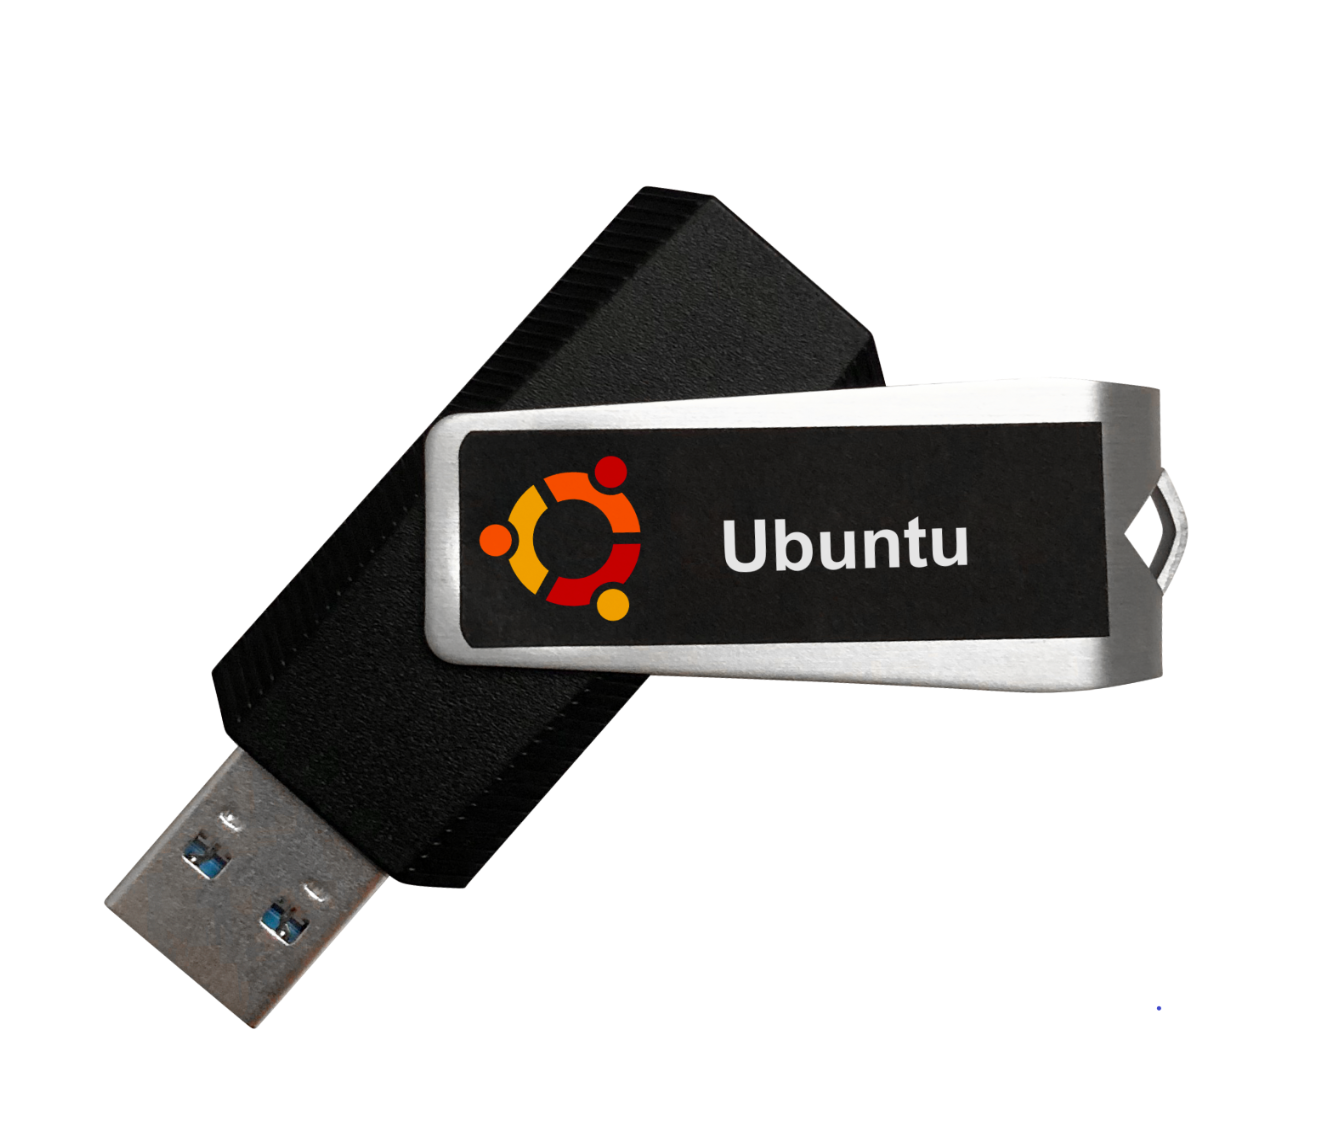 linux live usb creator ubuntu version